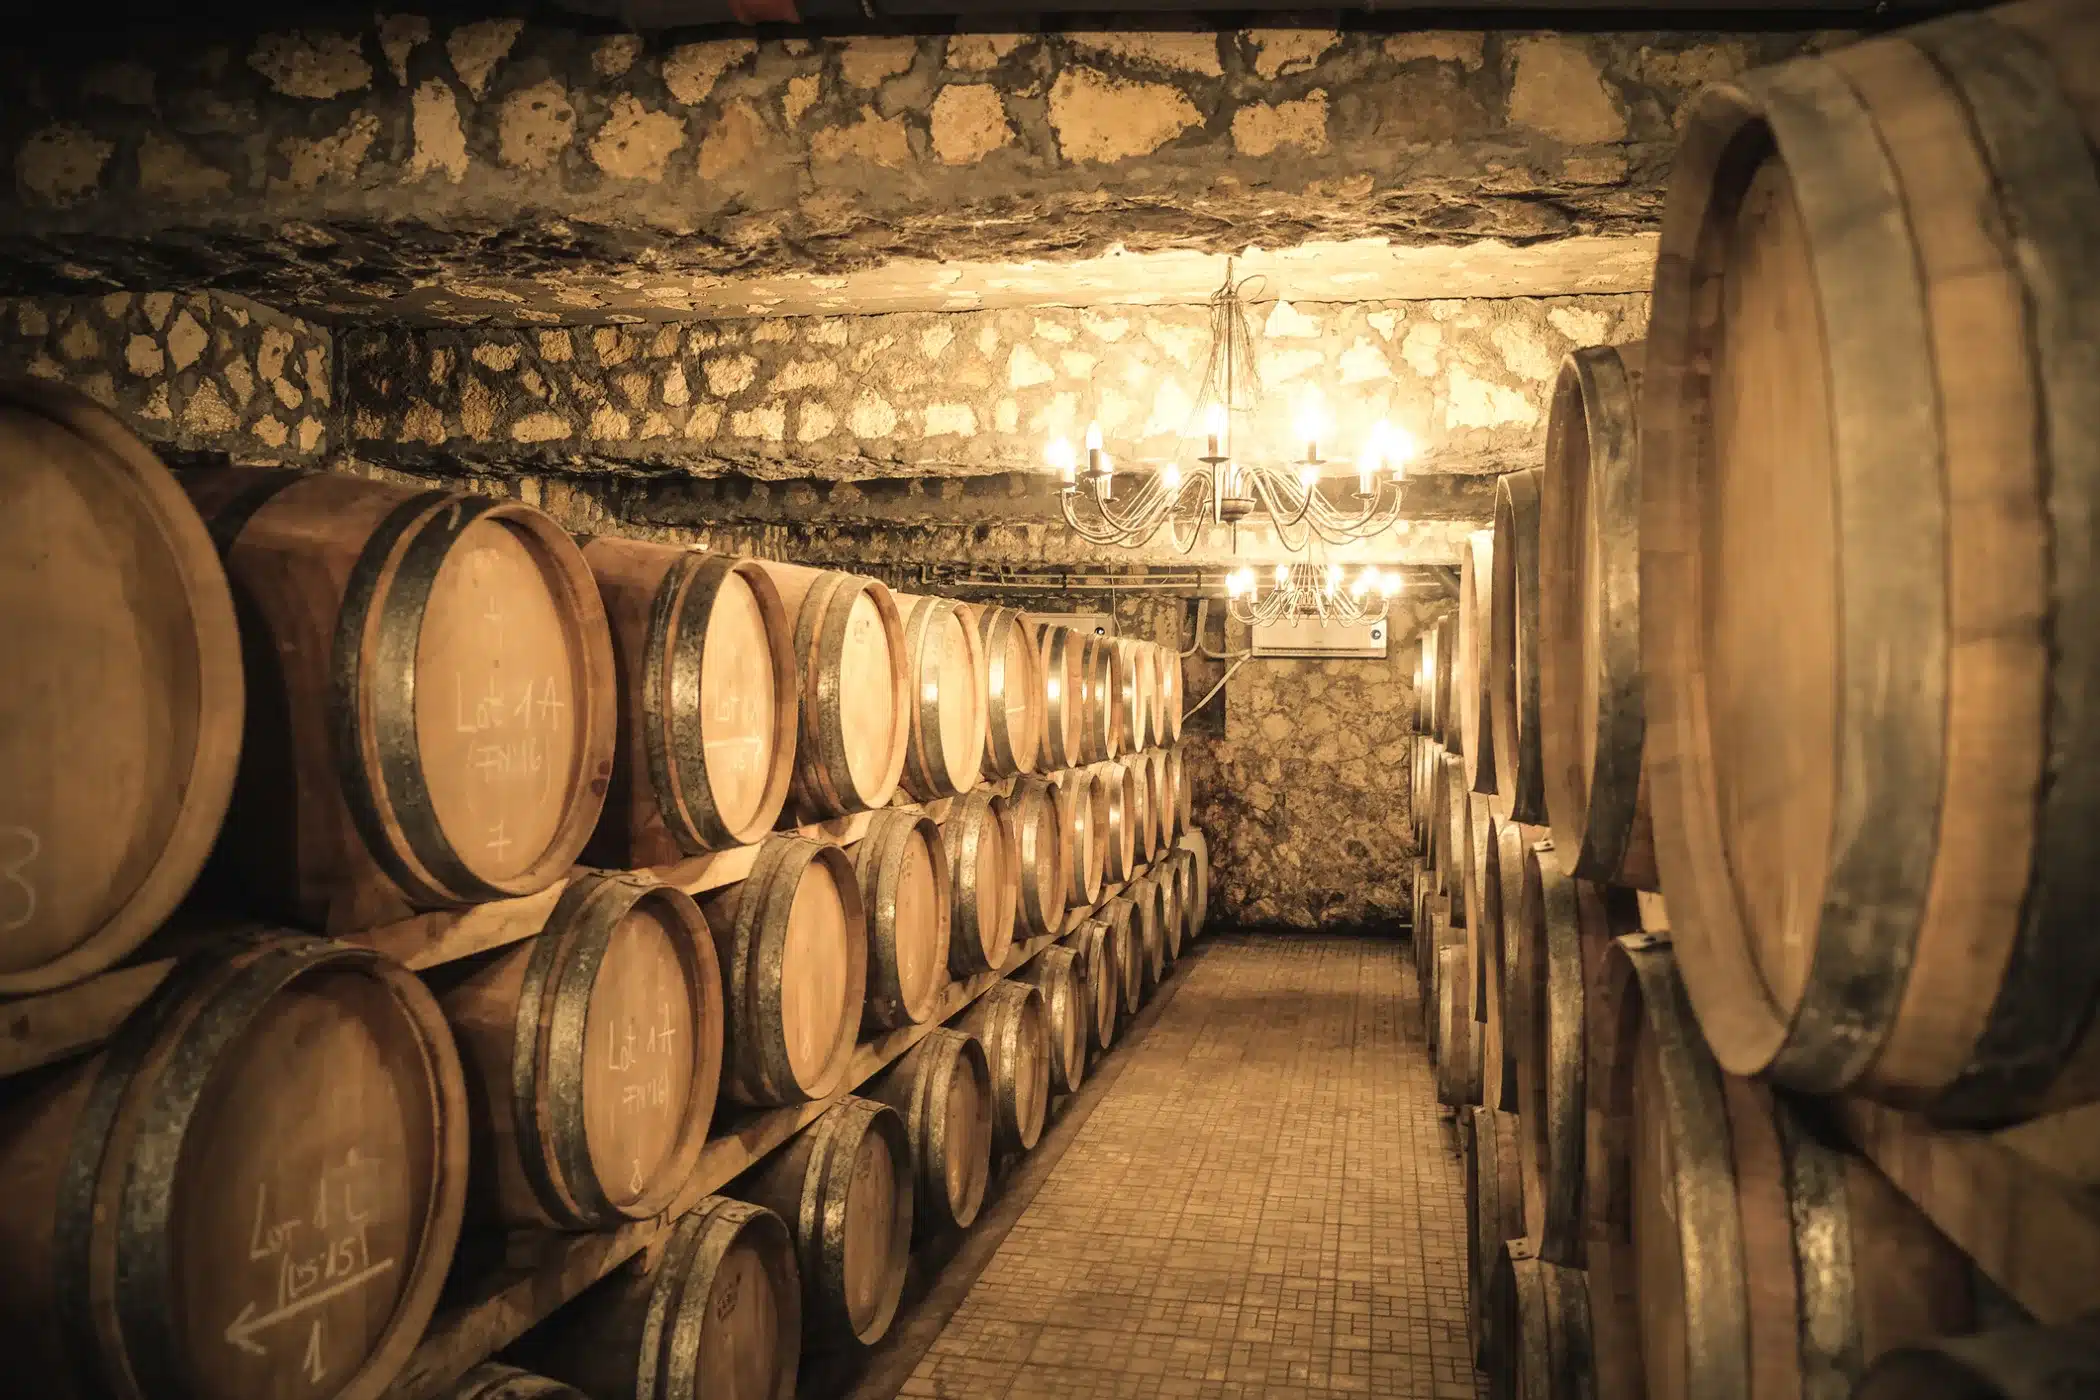 Vininvestering Vintage winery cellar with wine barrels